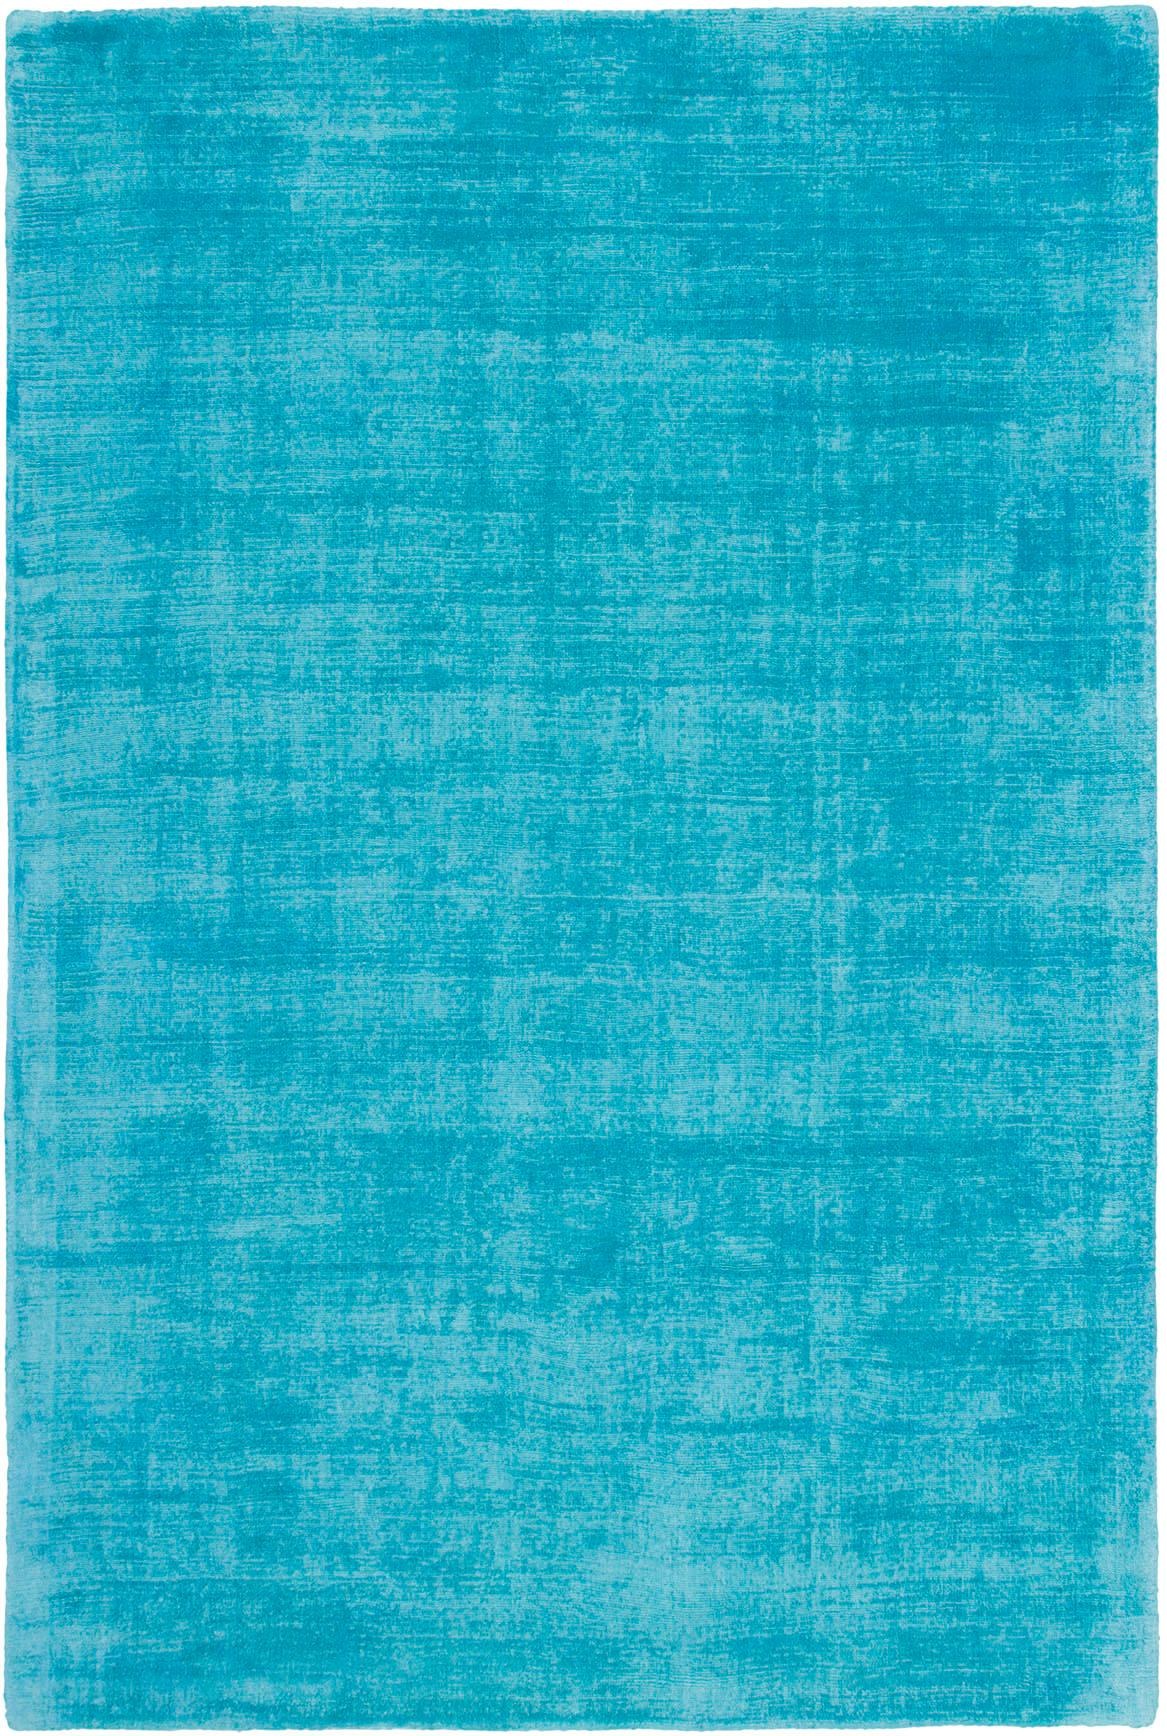 Obsession Teppich »My Maori 220«, rechteckig, Uni-Farben, Material: 100% Viskose, handgewebt, grosse Farbauswahl